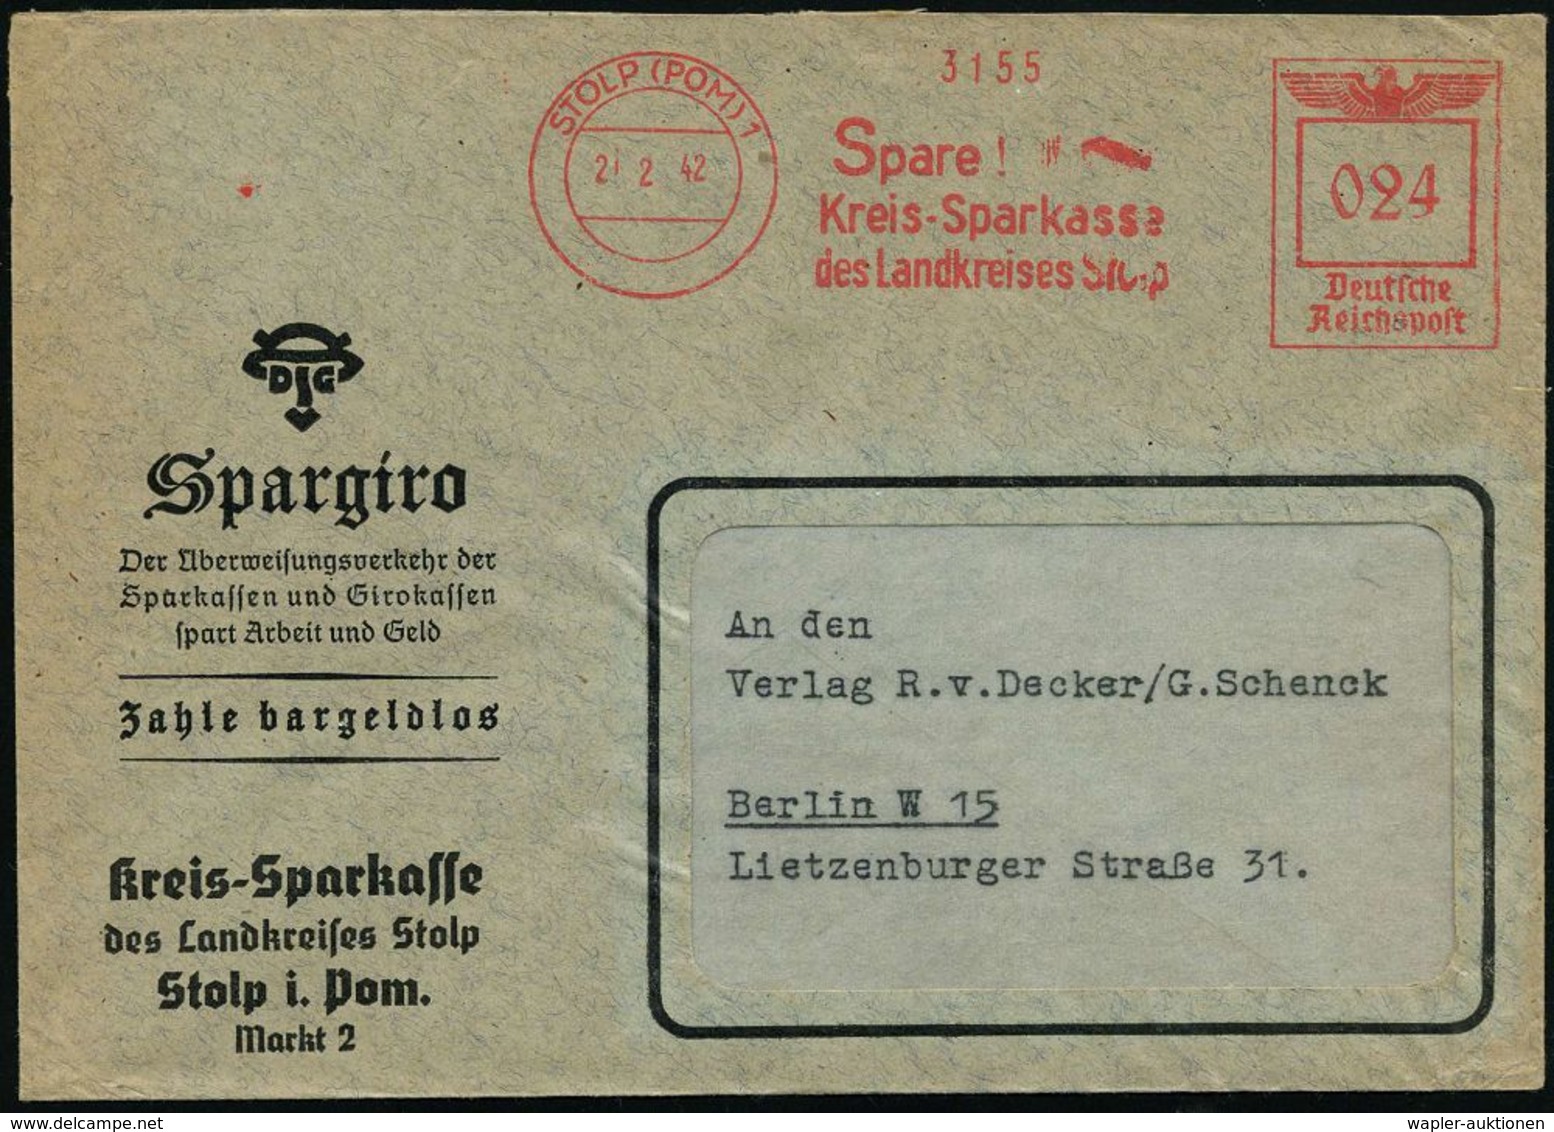 STOLP (POM)/ Spare!/ Kreis-Sparkasse/ D.Landkreises Stolp 1942 (21.2.) AFS Auf Firmen-Reklame-Bf.: Spargiro (Dü.E-5CEh)  - Non Classificati